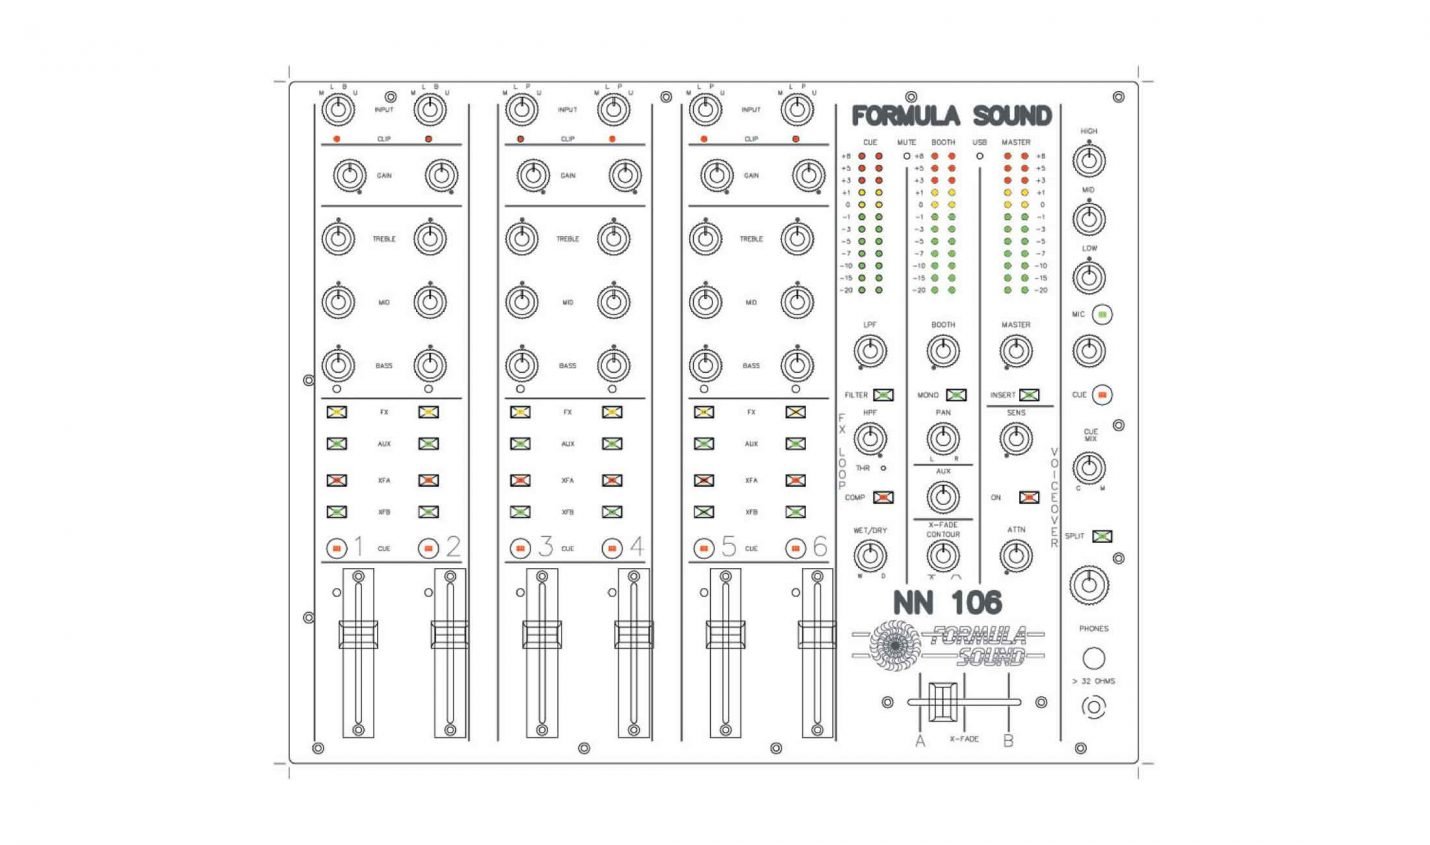 Neu: Formula Sound stellt Flagship-Mixer NN106 vor